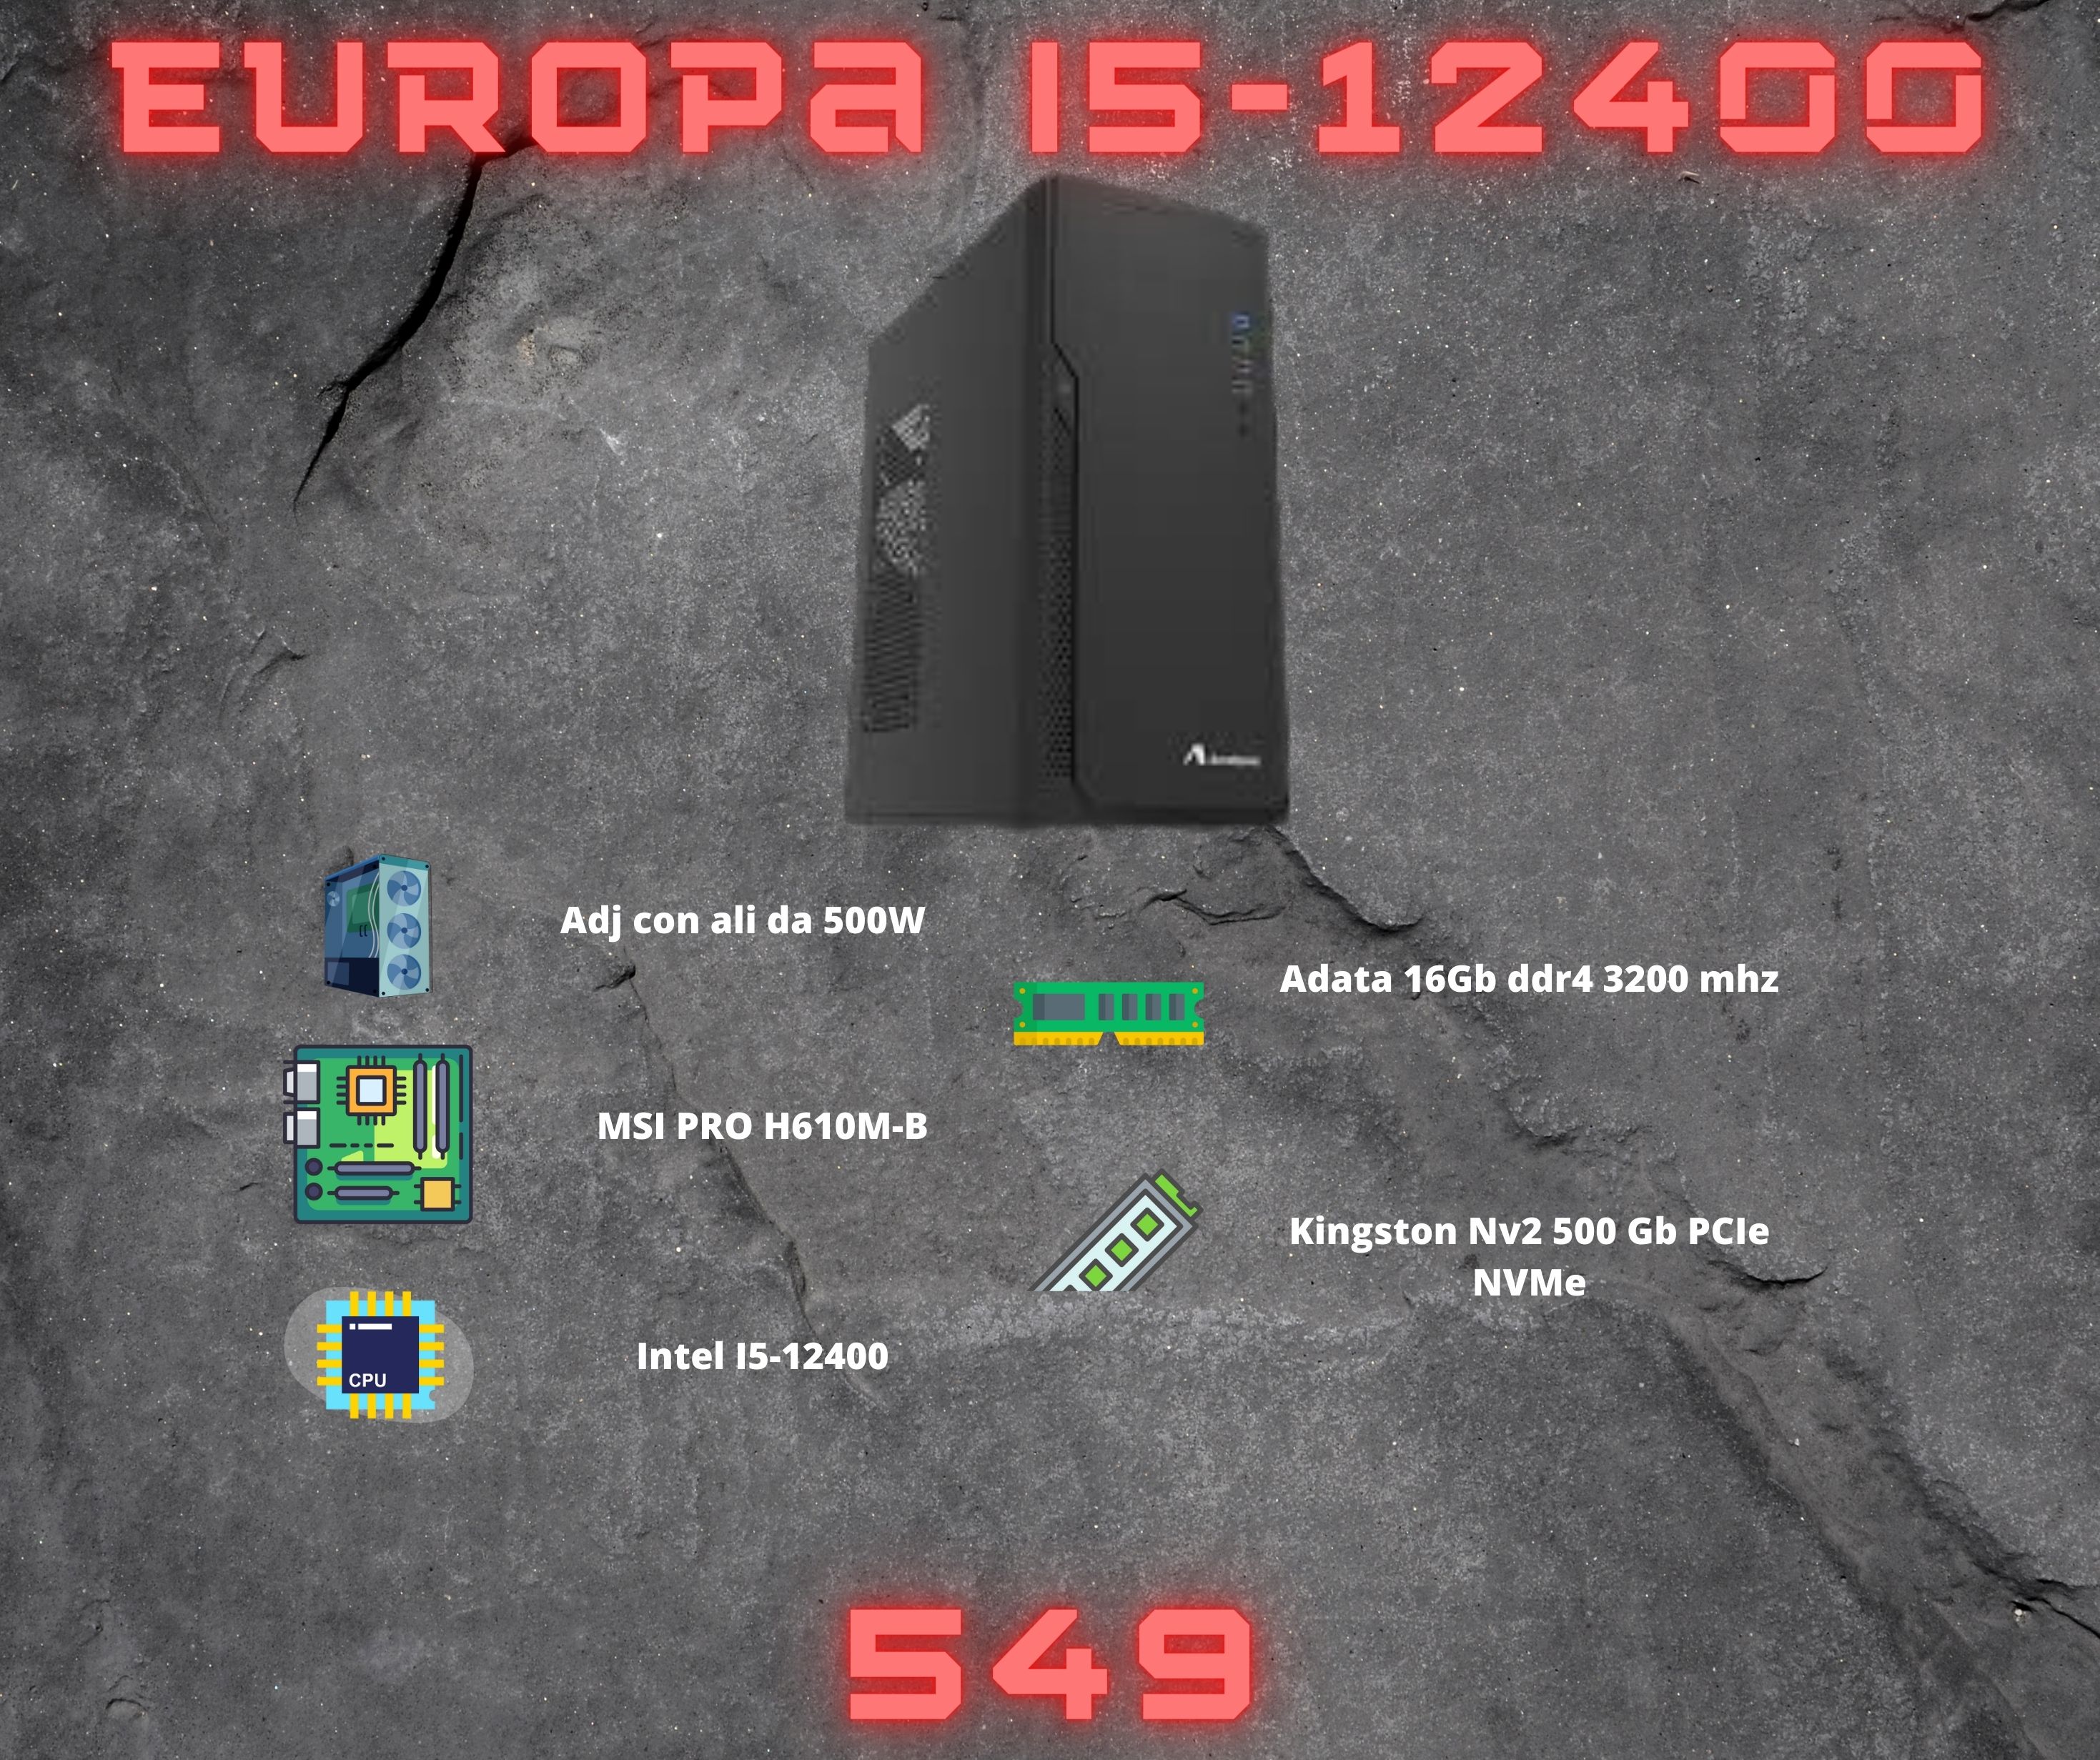 Europa I5-13400